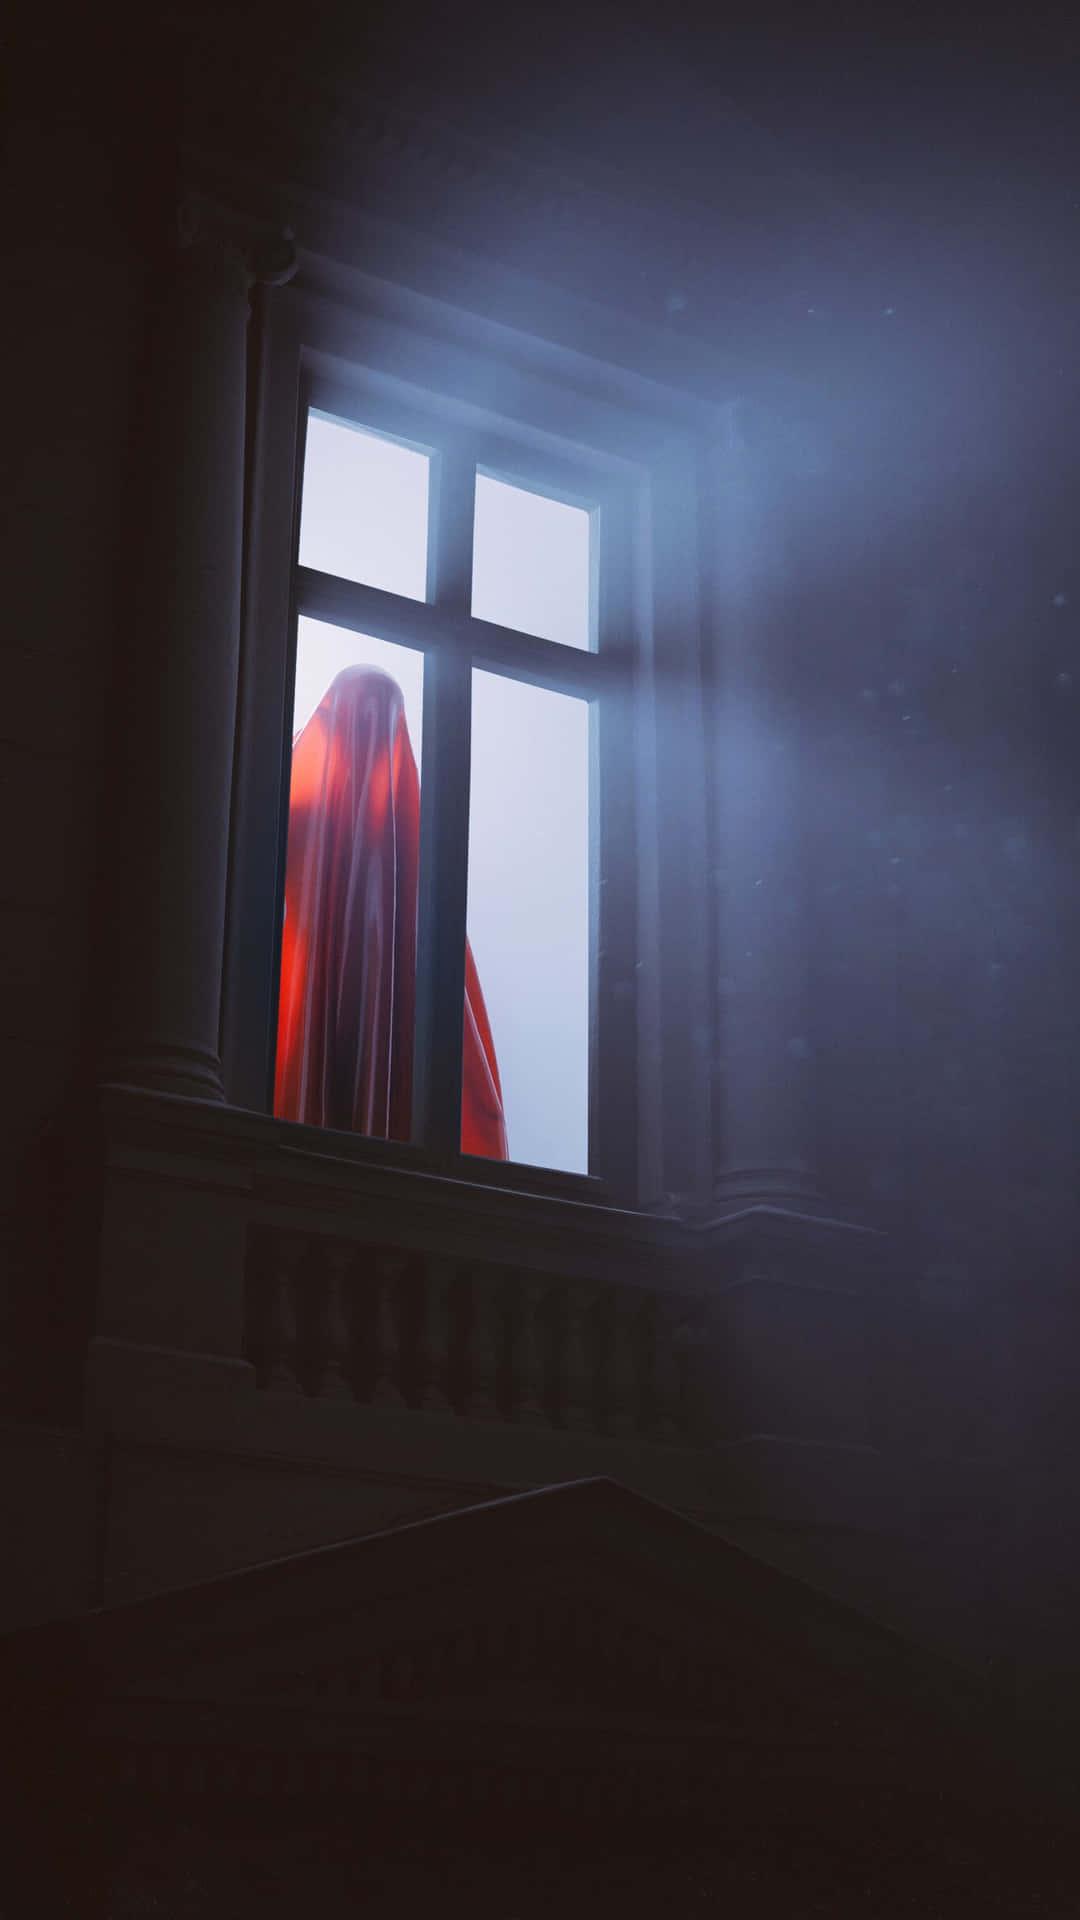 Mysterious Ghostly Figureat Window Wallpaper